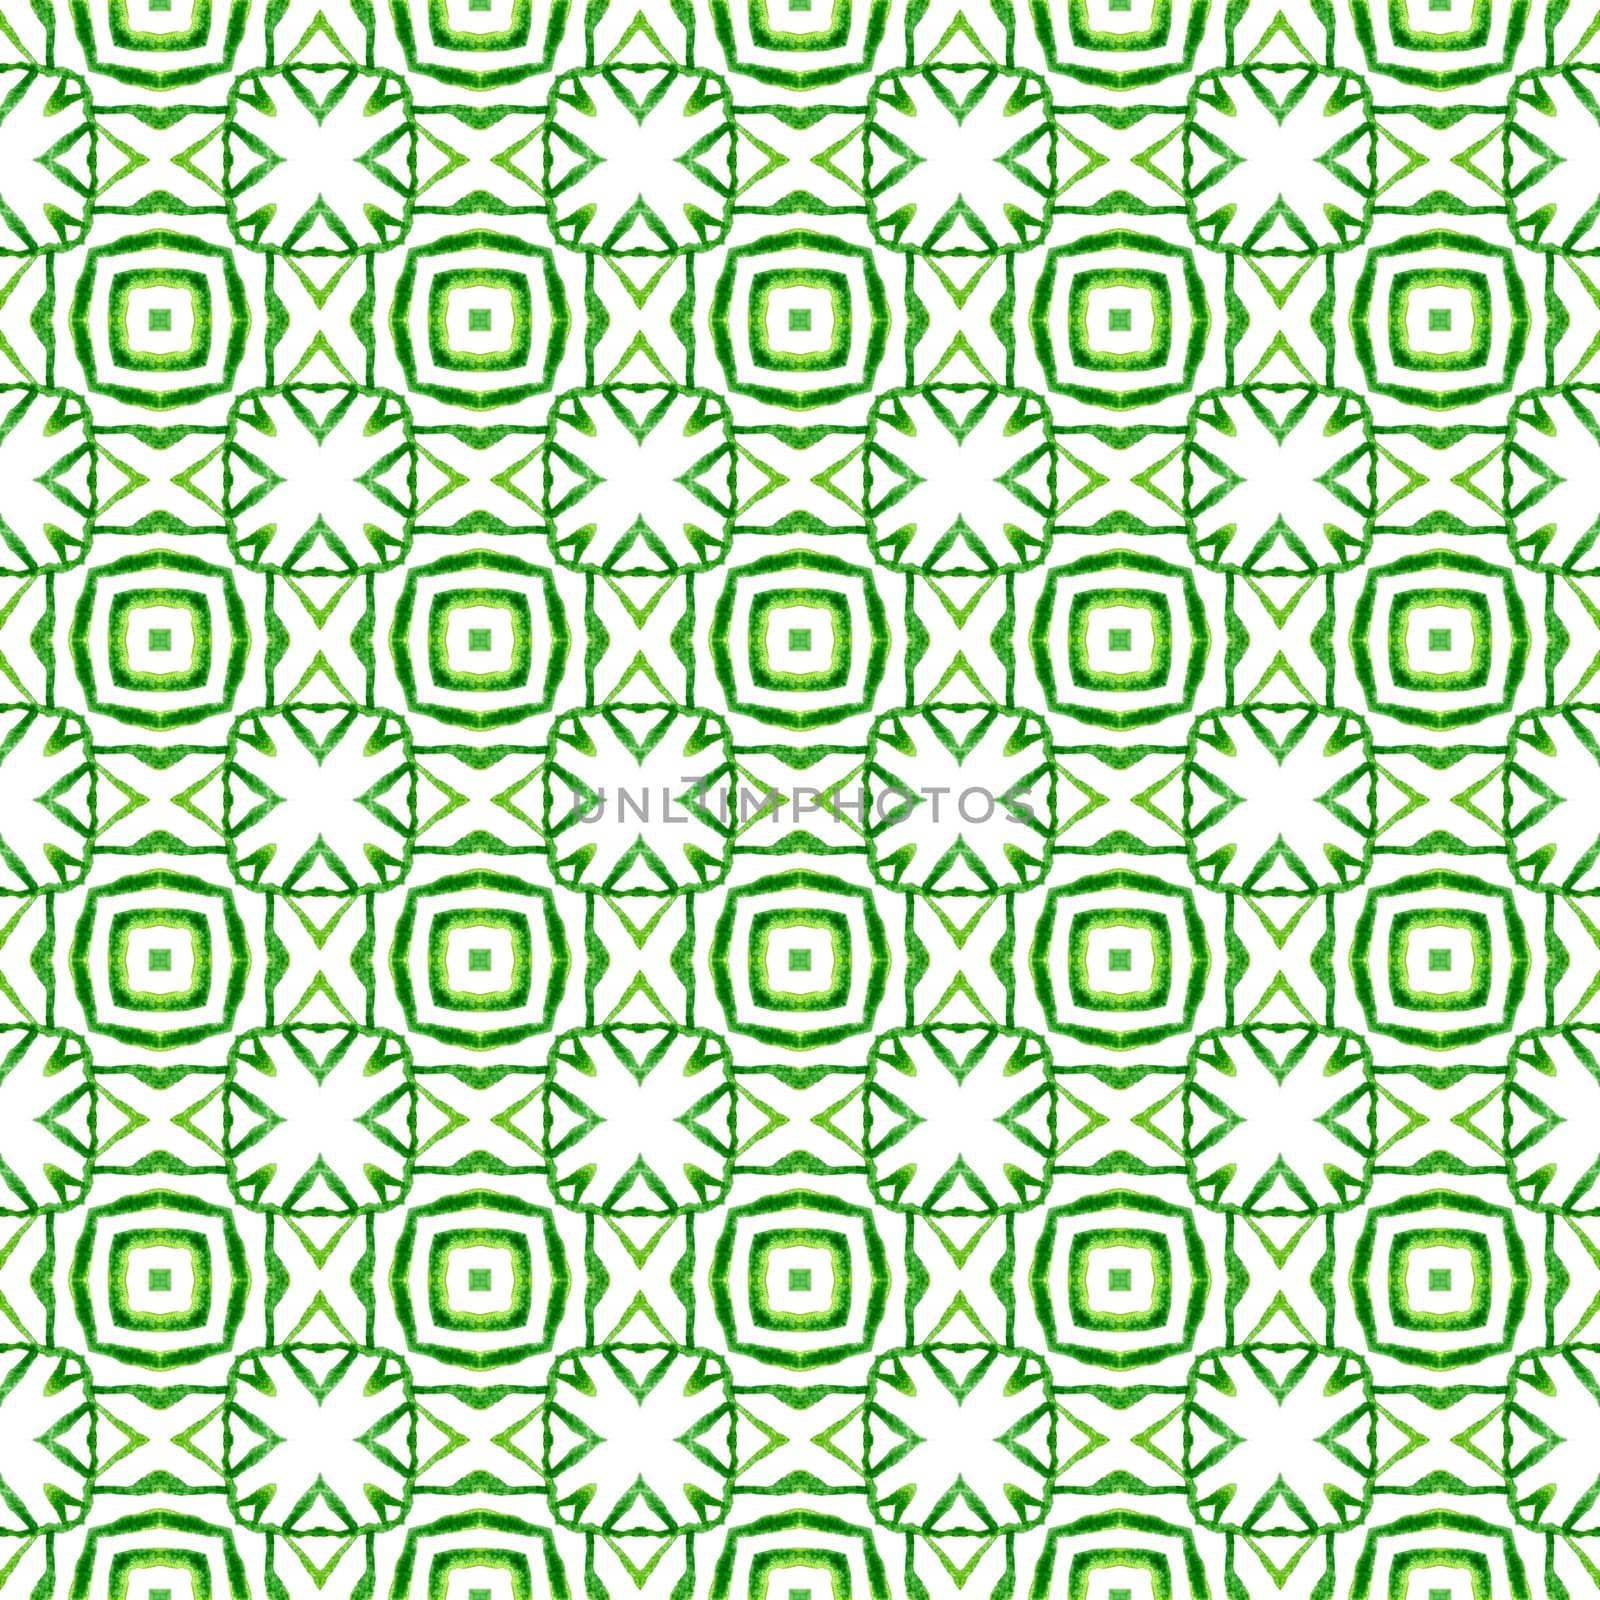 Textile ready fine print, swimwear fabric, wallpaper, wrapping. Green symmetrical boho chic summer design. Oriental arabesque hand drawn border. Arabesque hand drawn design.